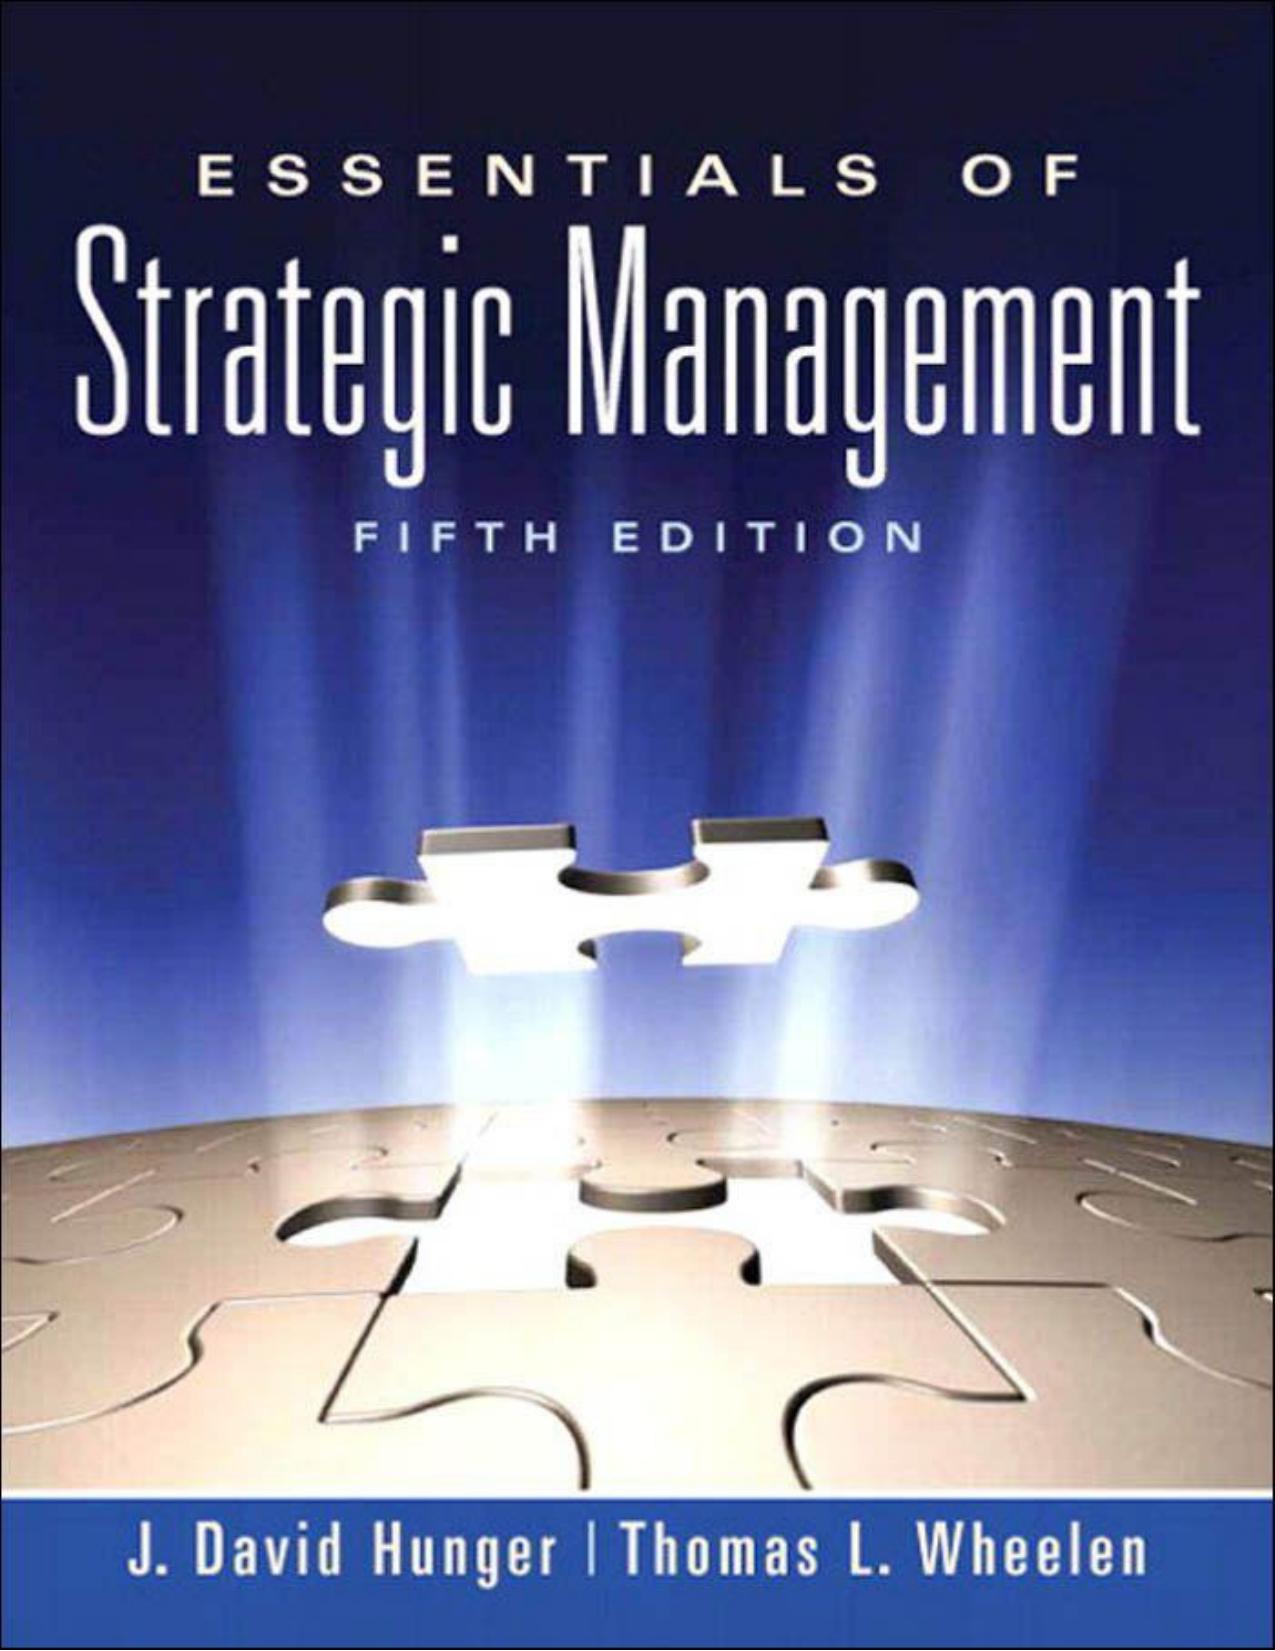 Essentials of strategic management 5th Edition by David Hunger Thomas L. Wheelen - Hunger, J. David & Wheelen, Thomas L_.jpg